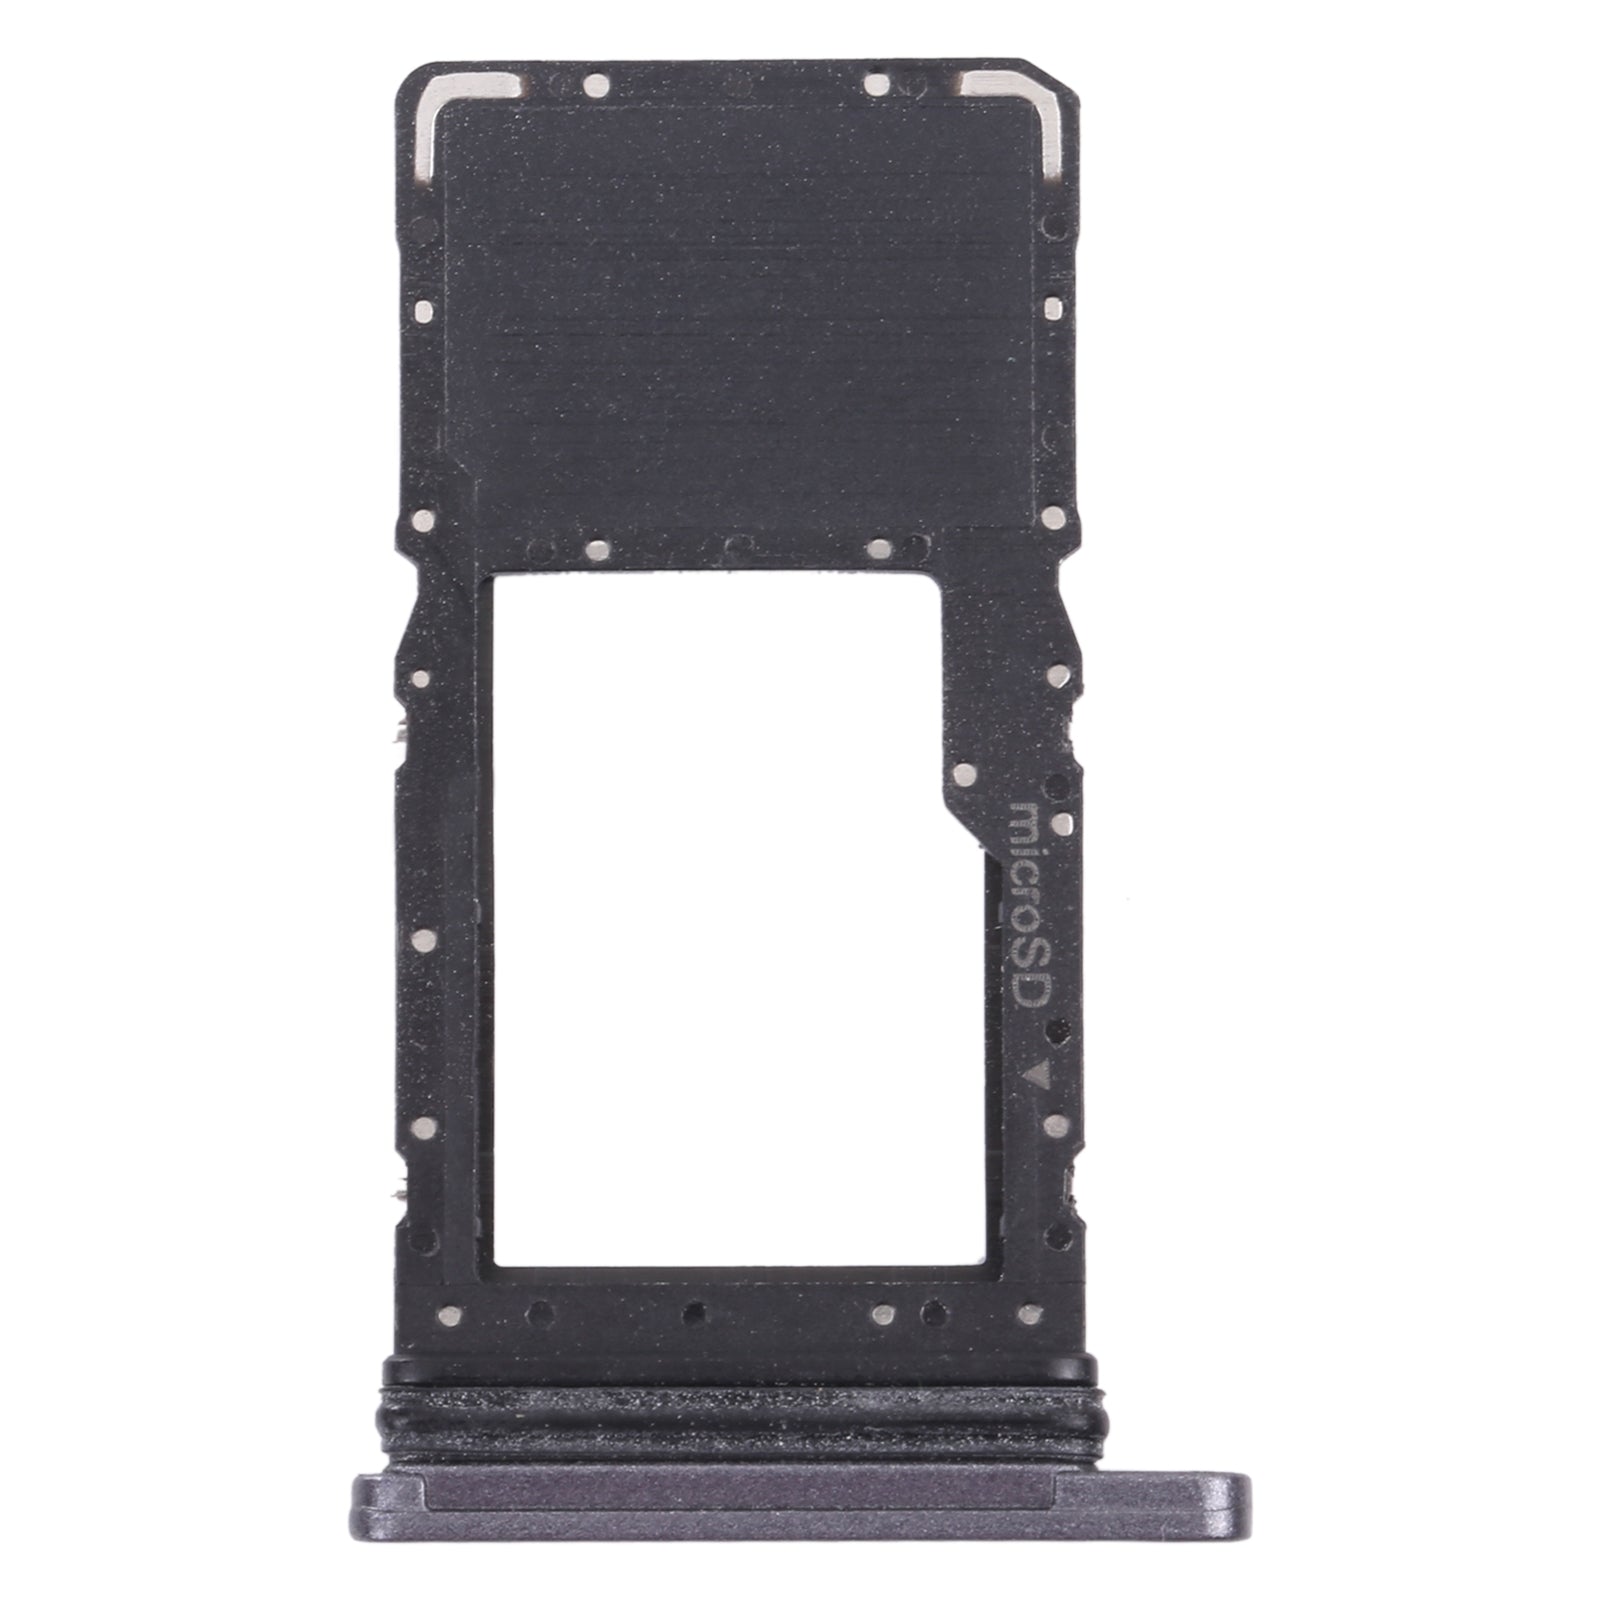 Micro SD Tray Holder Samsung Galaxy Tab A7 10.4 2020 T505 Black